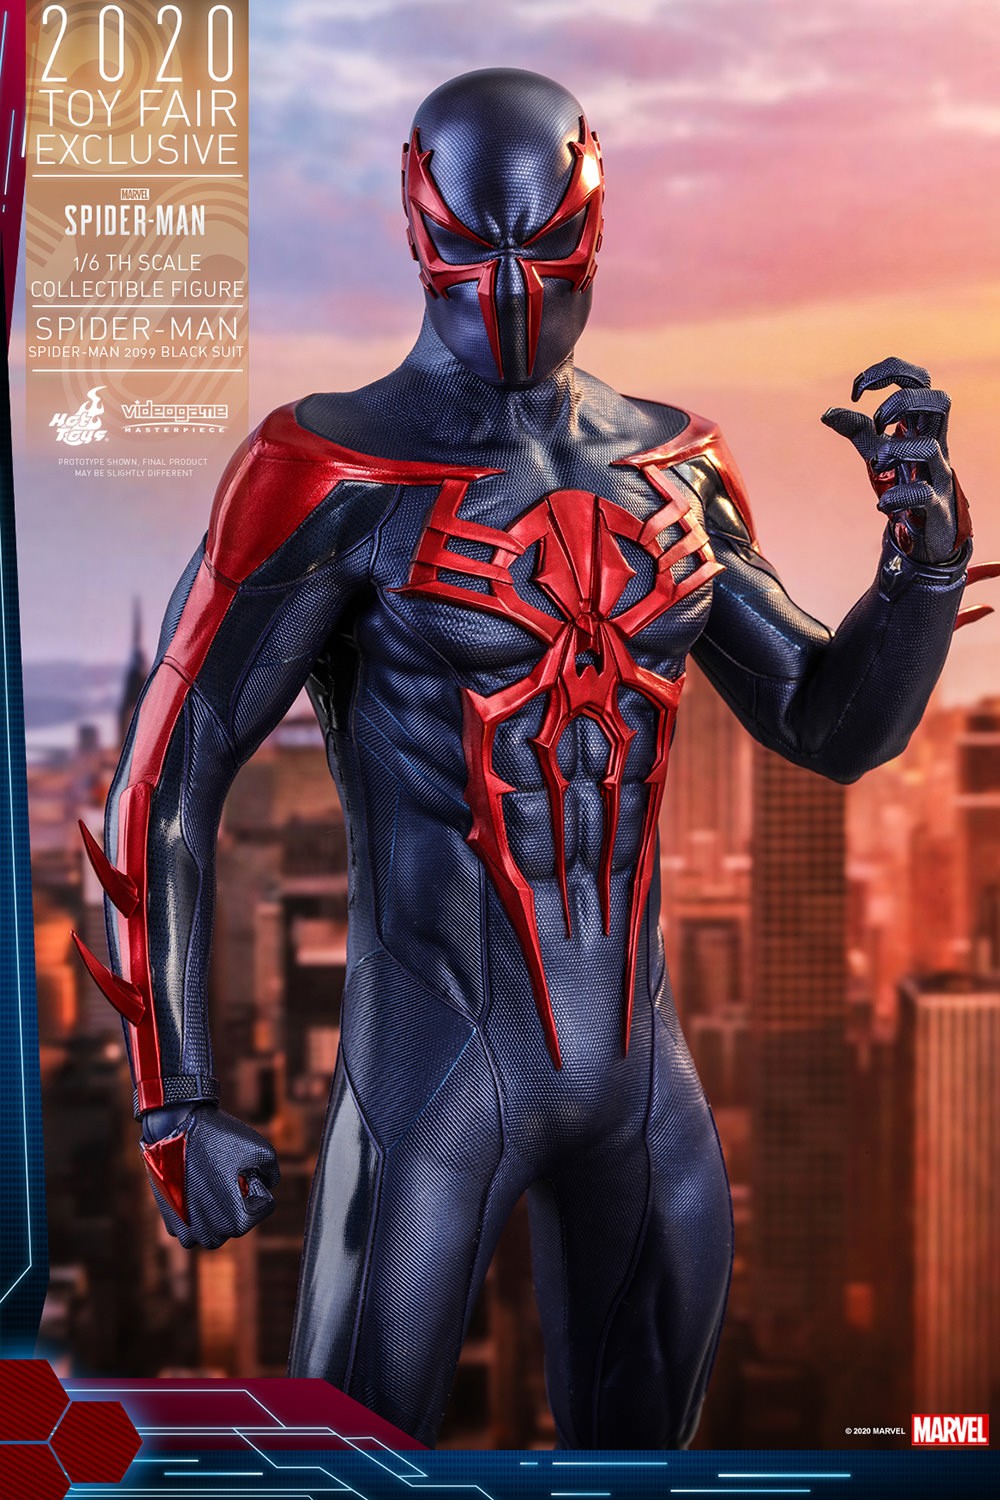 Spider-Man (Spider-Man 2099 Black Suit) Exclusive Edition (Prototype Shown) View 12